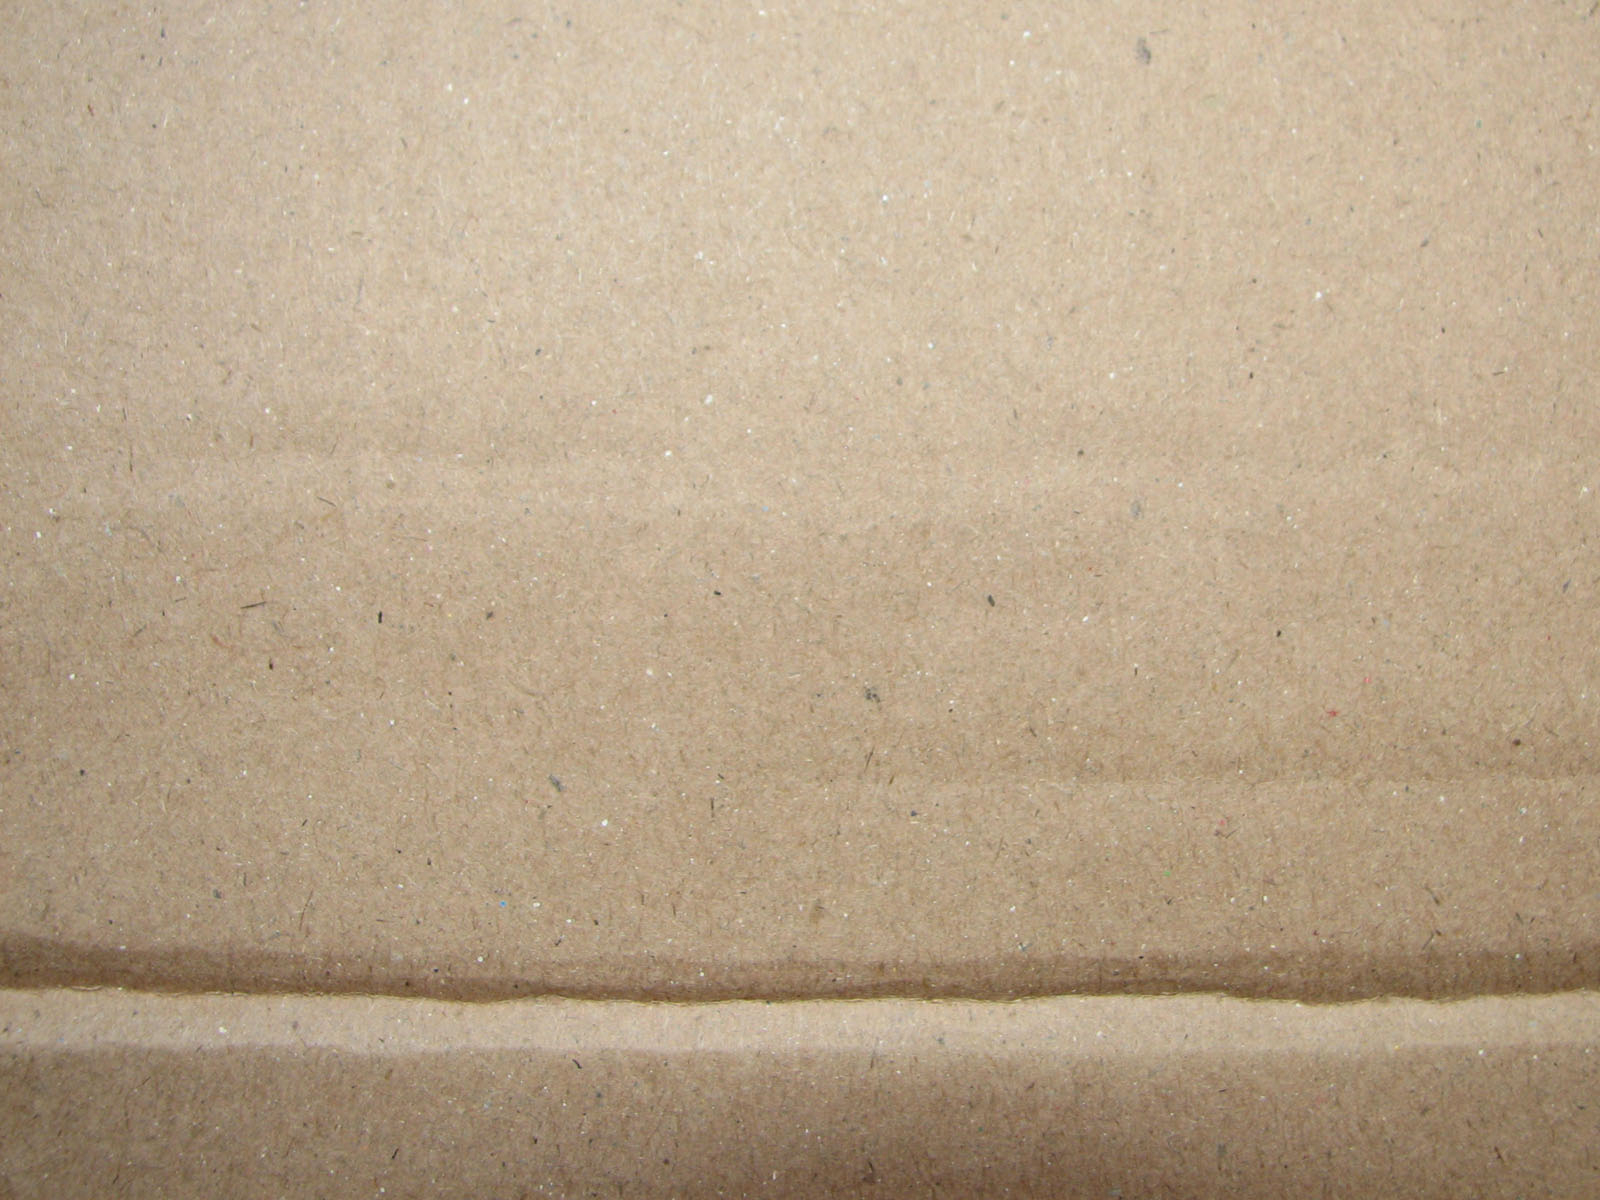 Cardboard-06 for 1600 x 1200 resolution